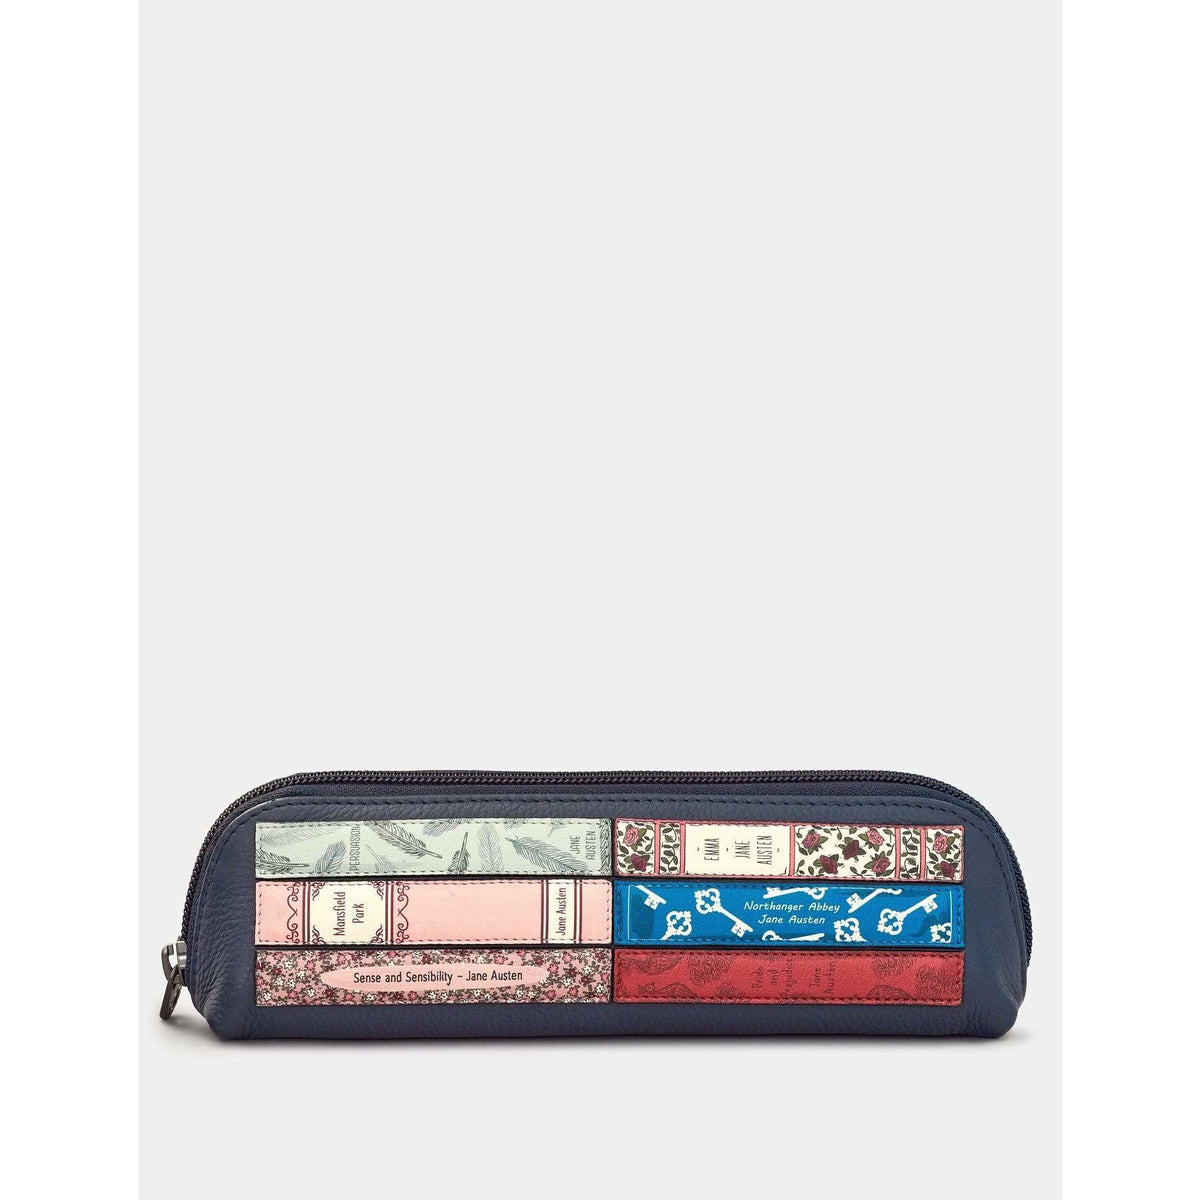 Jane Austen Bookworm Pencil Case BookGeek